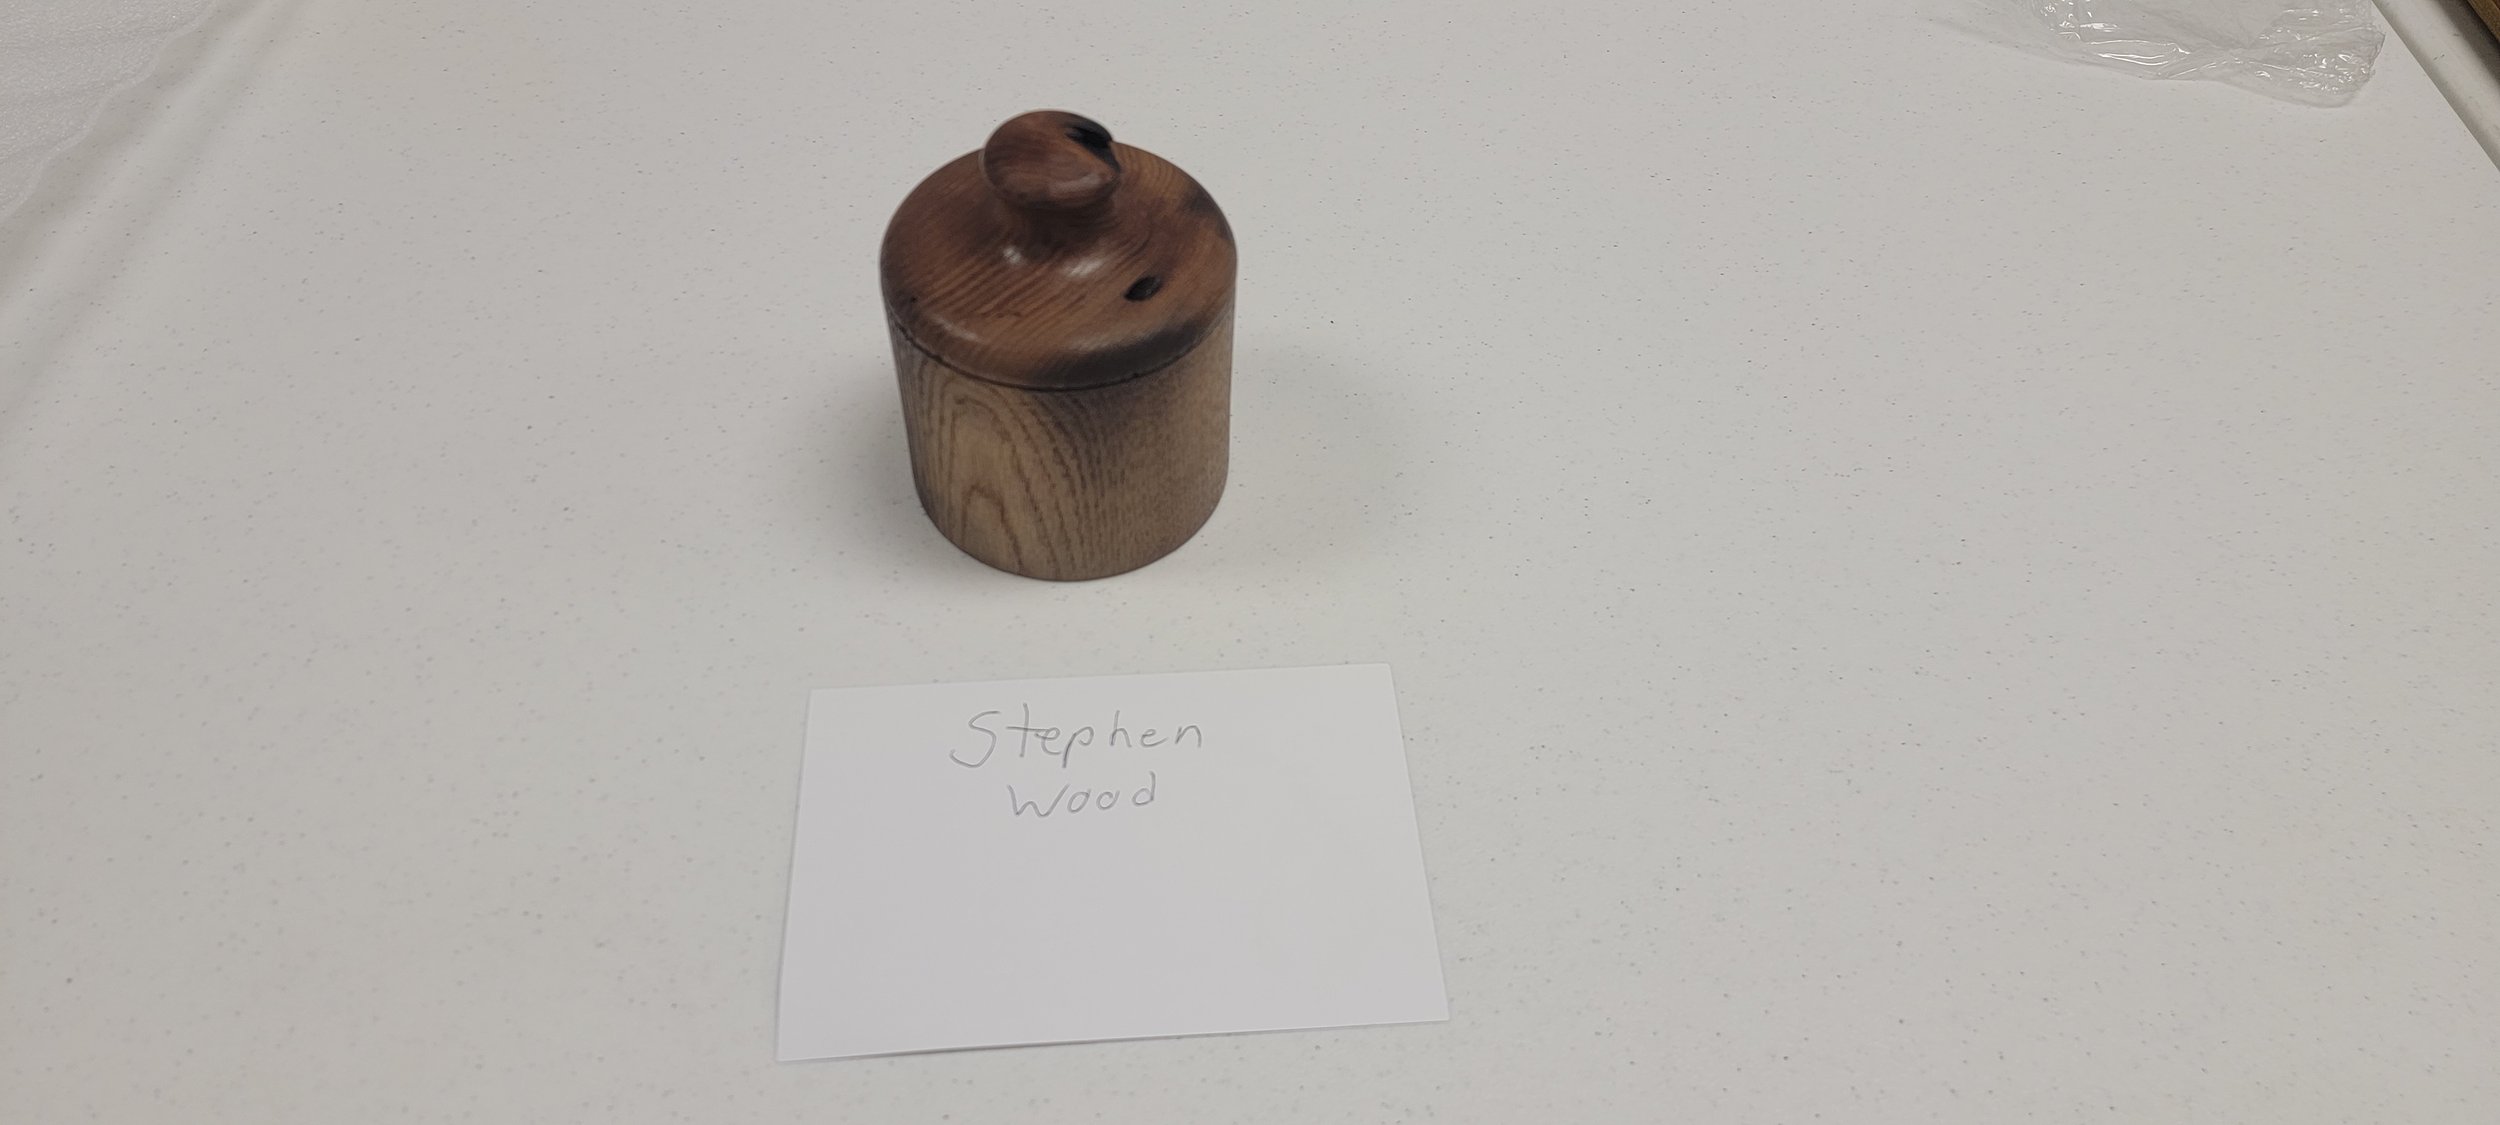  Stephen Wood lidded box. 